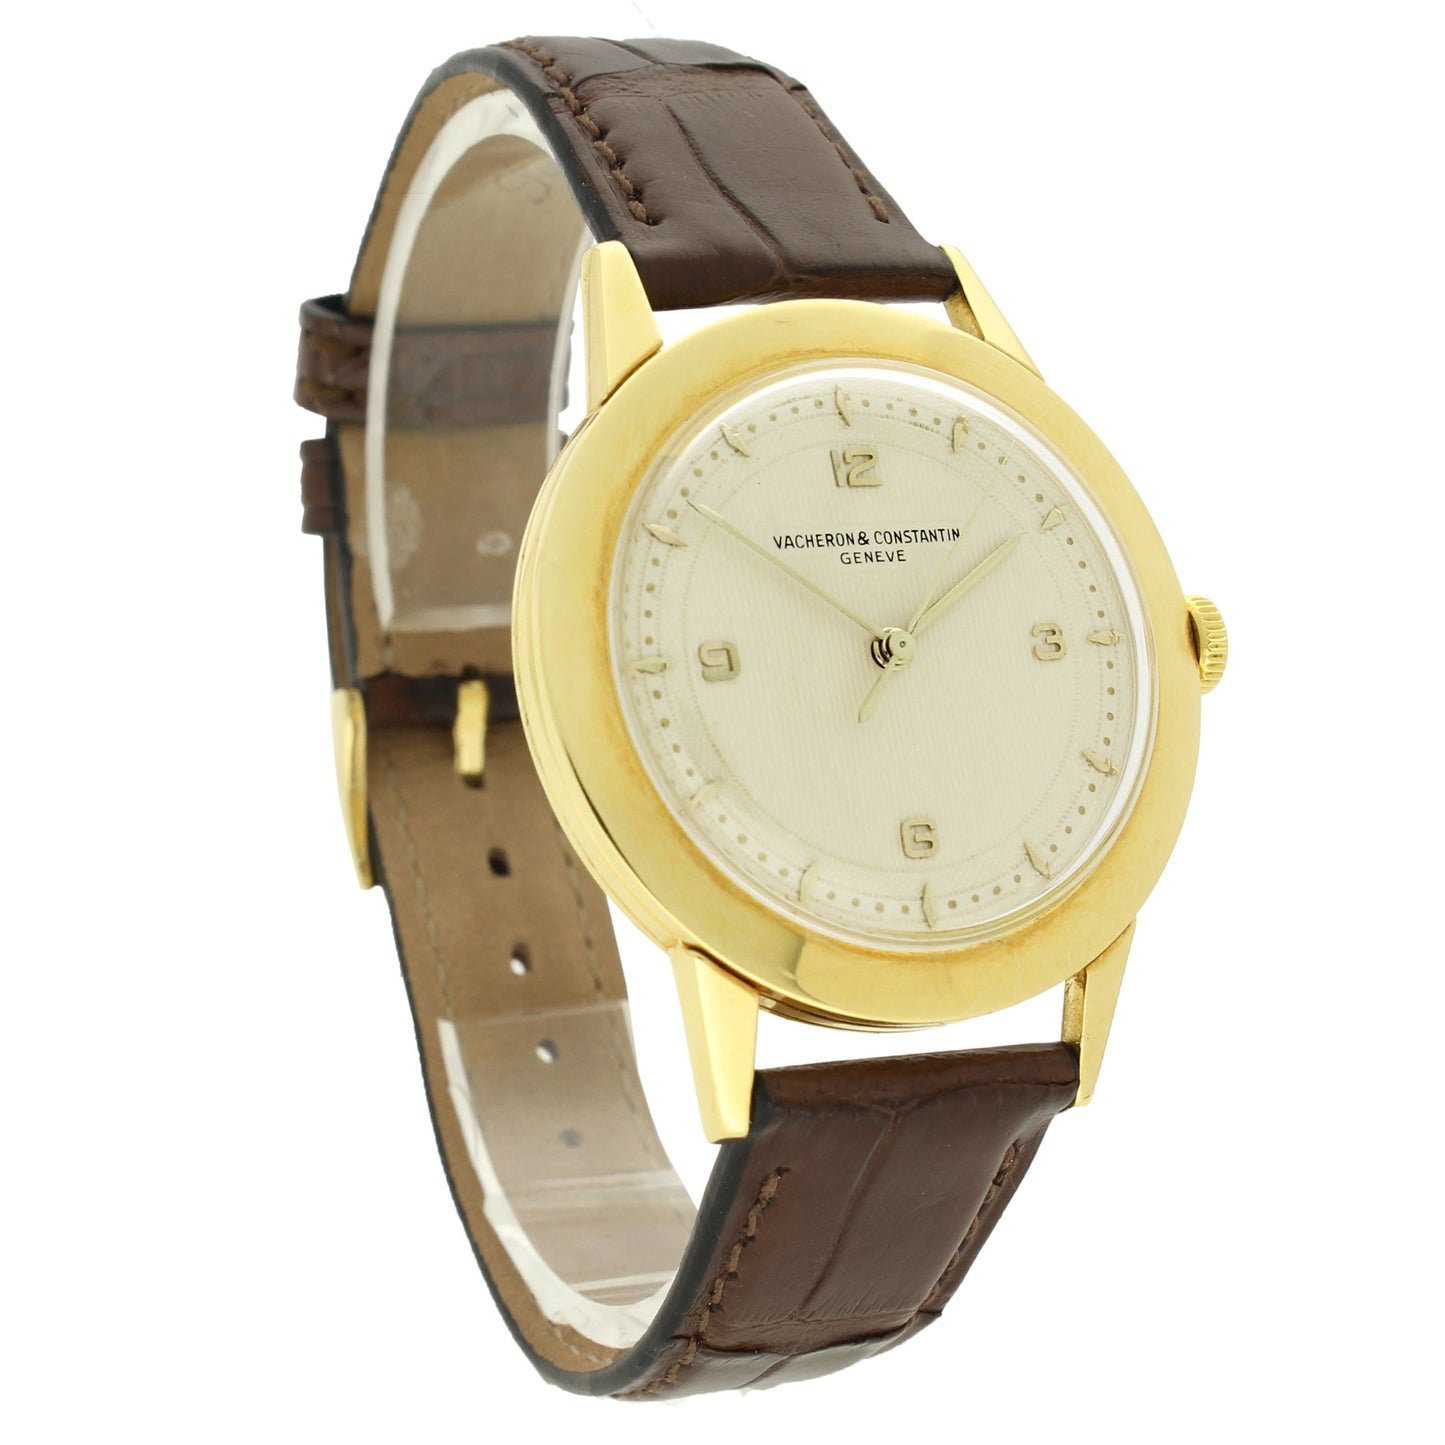 18ct yellow gold Vacheron & Constantin wristwatch. Made 1950's